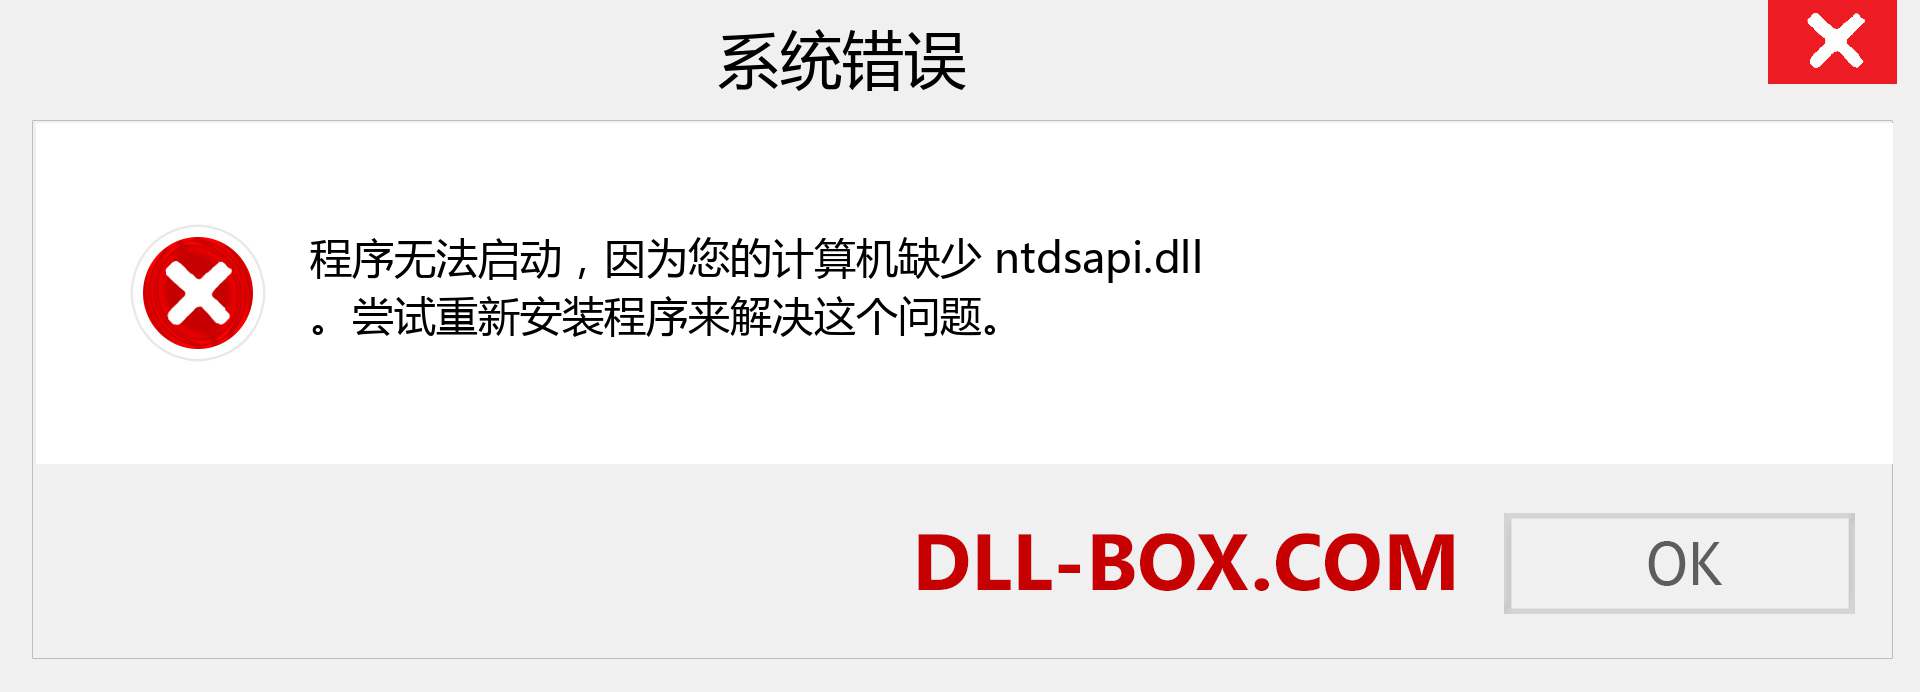 ntdsapi.dll 文件丢失？。 适用于 Windows 7、8、10 的下载 - 修复 Windows、照片、图像上的 ntdsapi dll 丢失错误